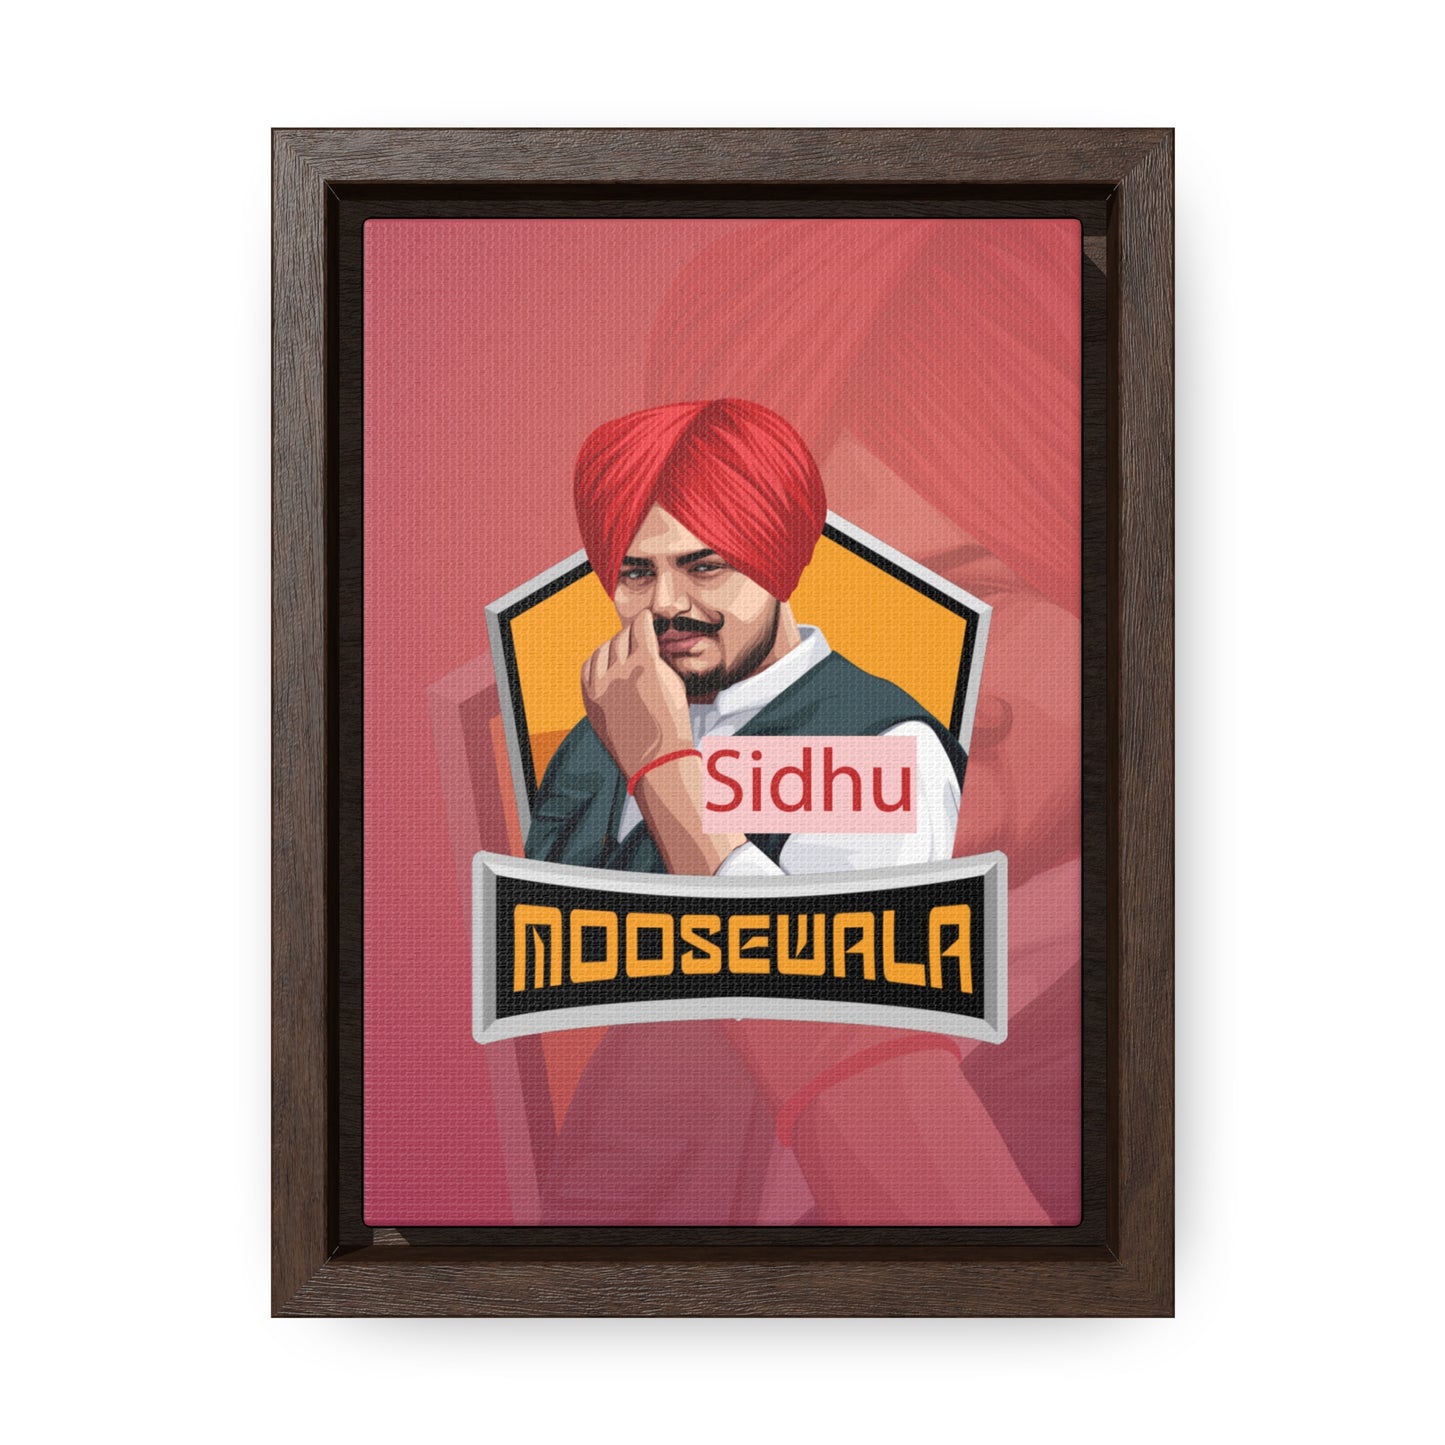 Sidhu Moosewala Wall Art By Signology (Premium Quality)